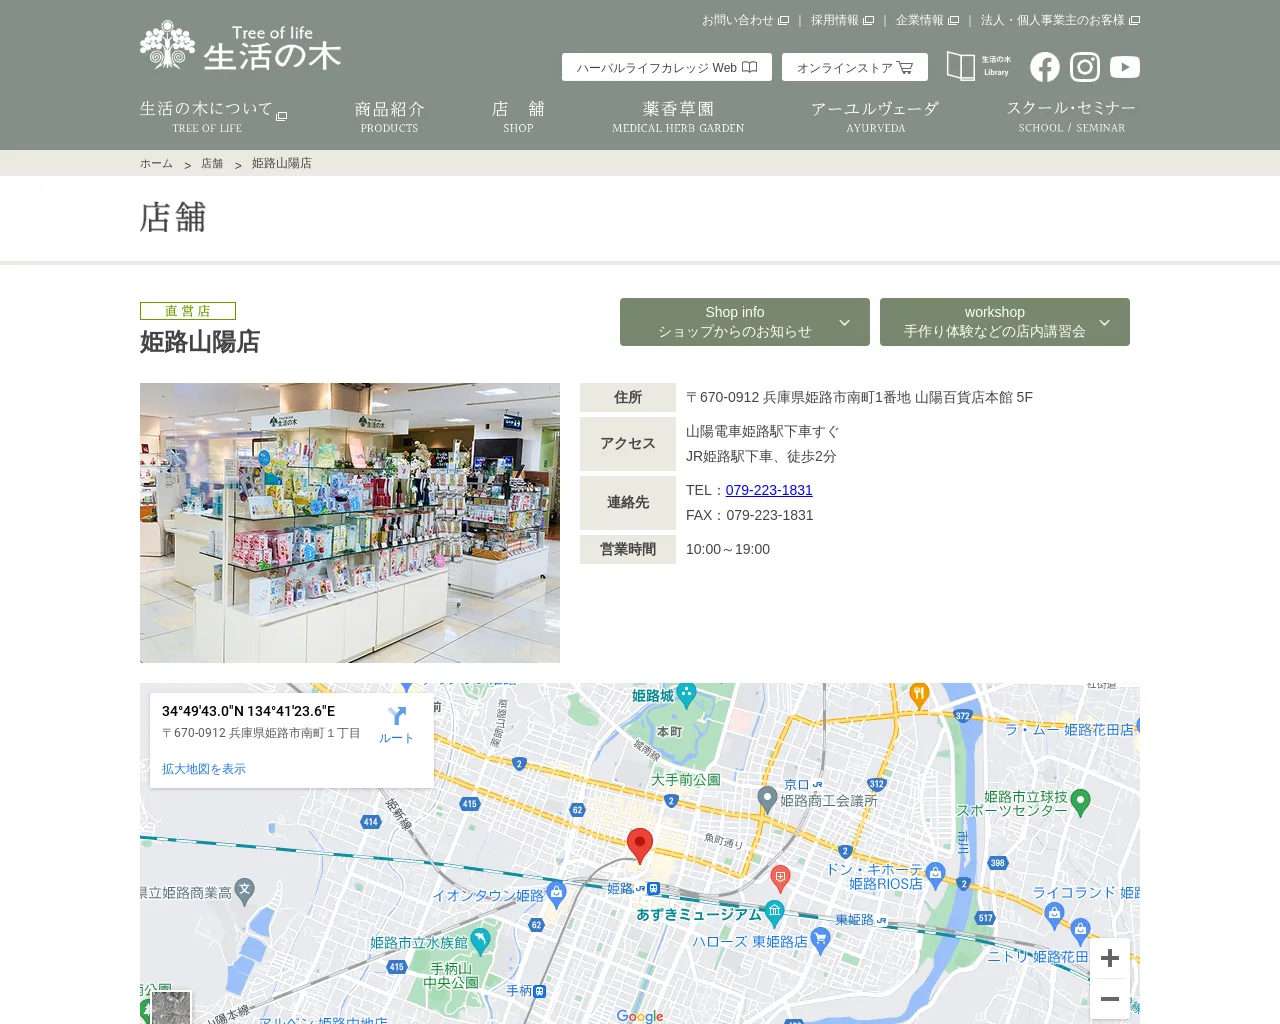 生活の木 姫路山陽店 site